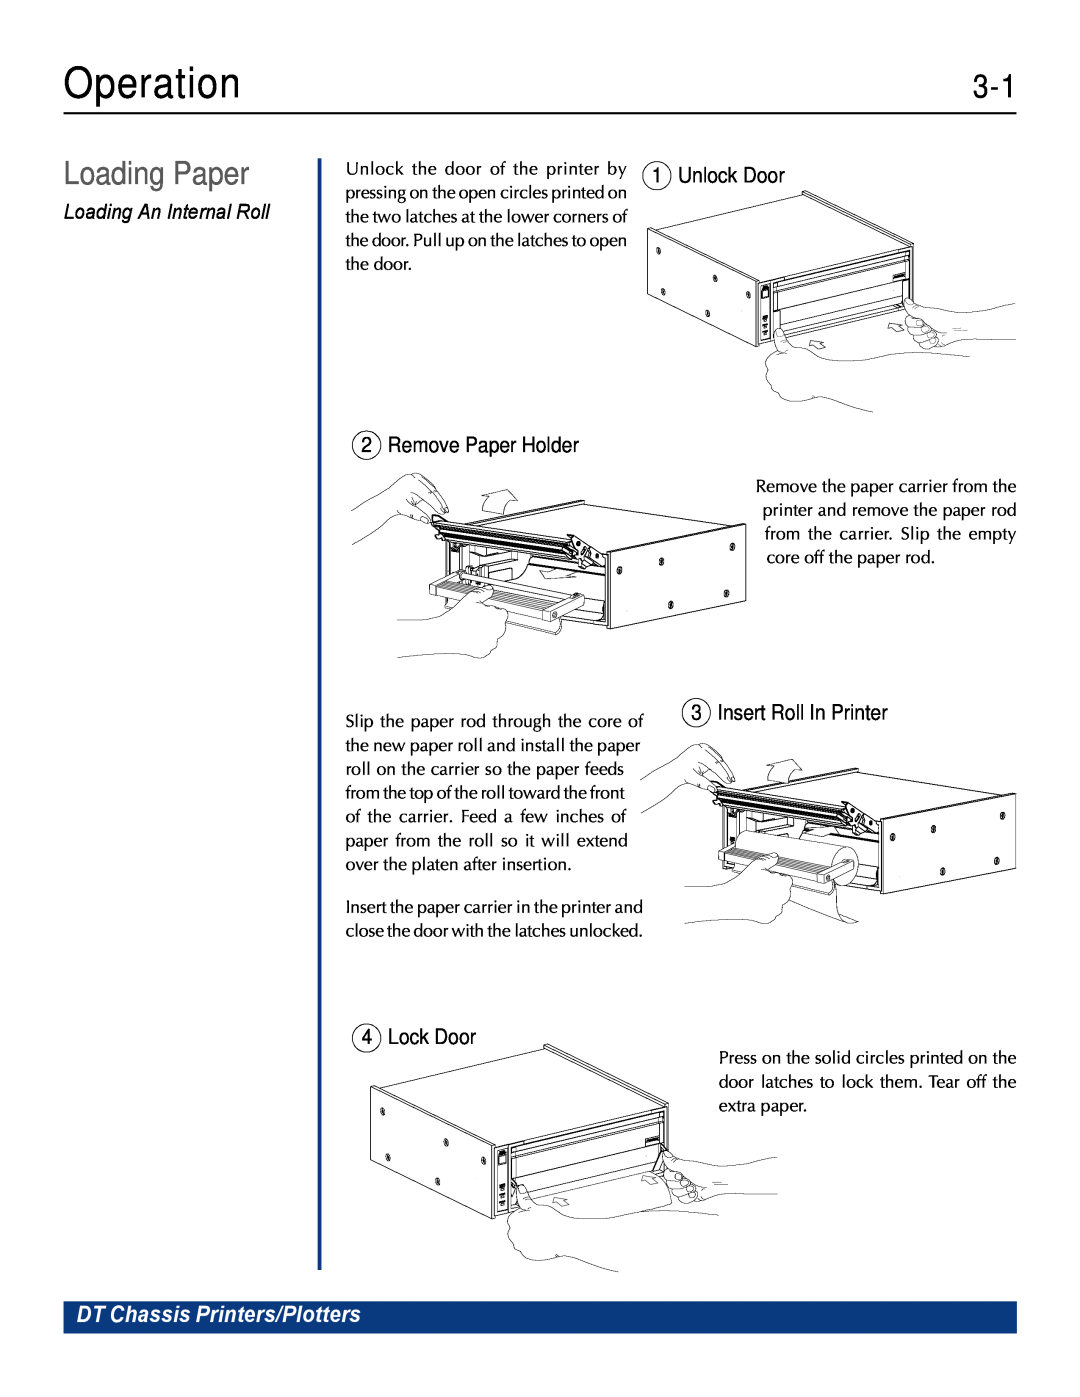 Printek 840DL/G Operation, Loading Paper, Loading An Internal Roll, Remove Paper Holder, Insert Roll In Printer, Lock Door 